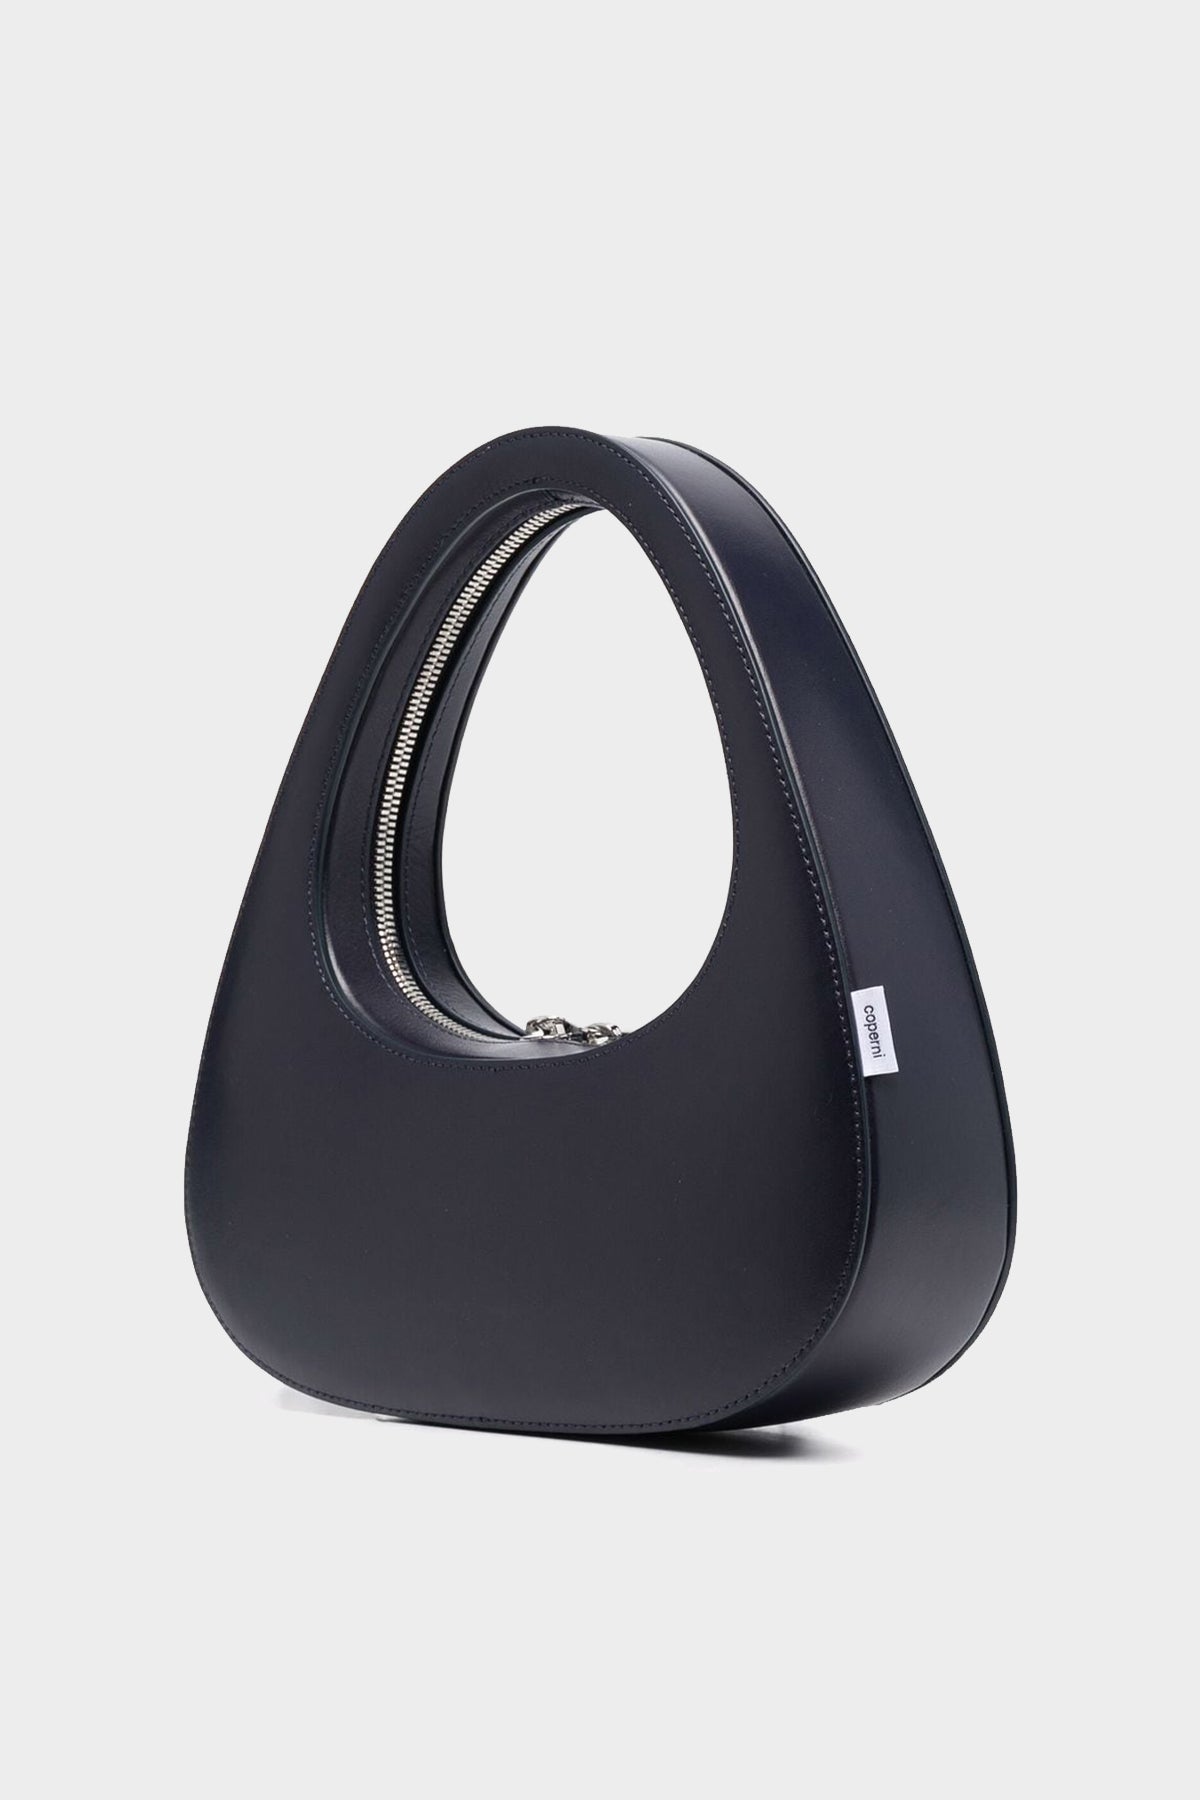 Baguette Swipe Bag in Black - shop-olivia.com